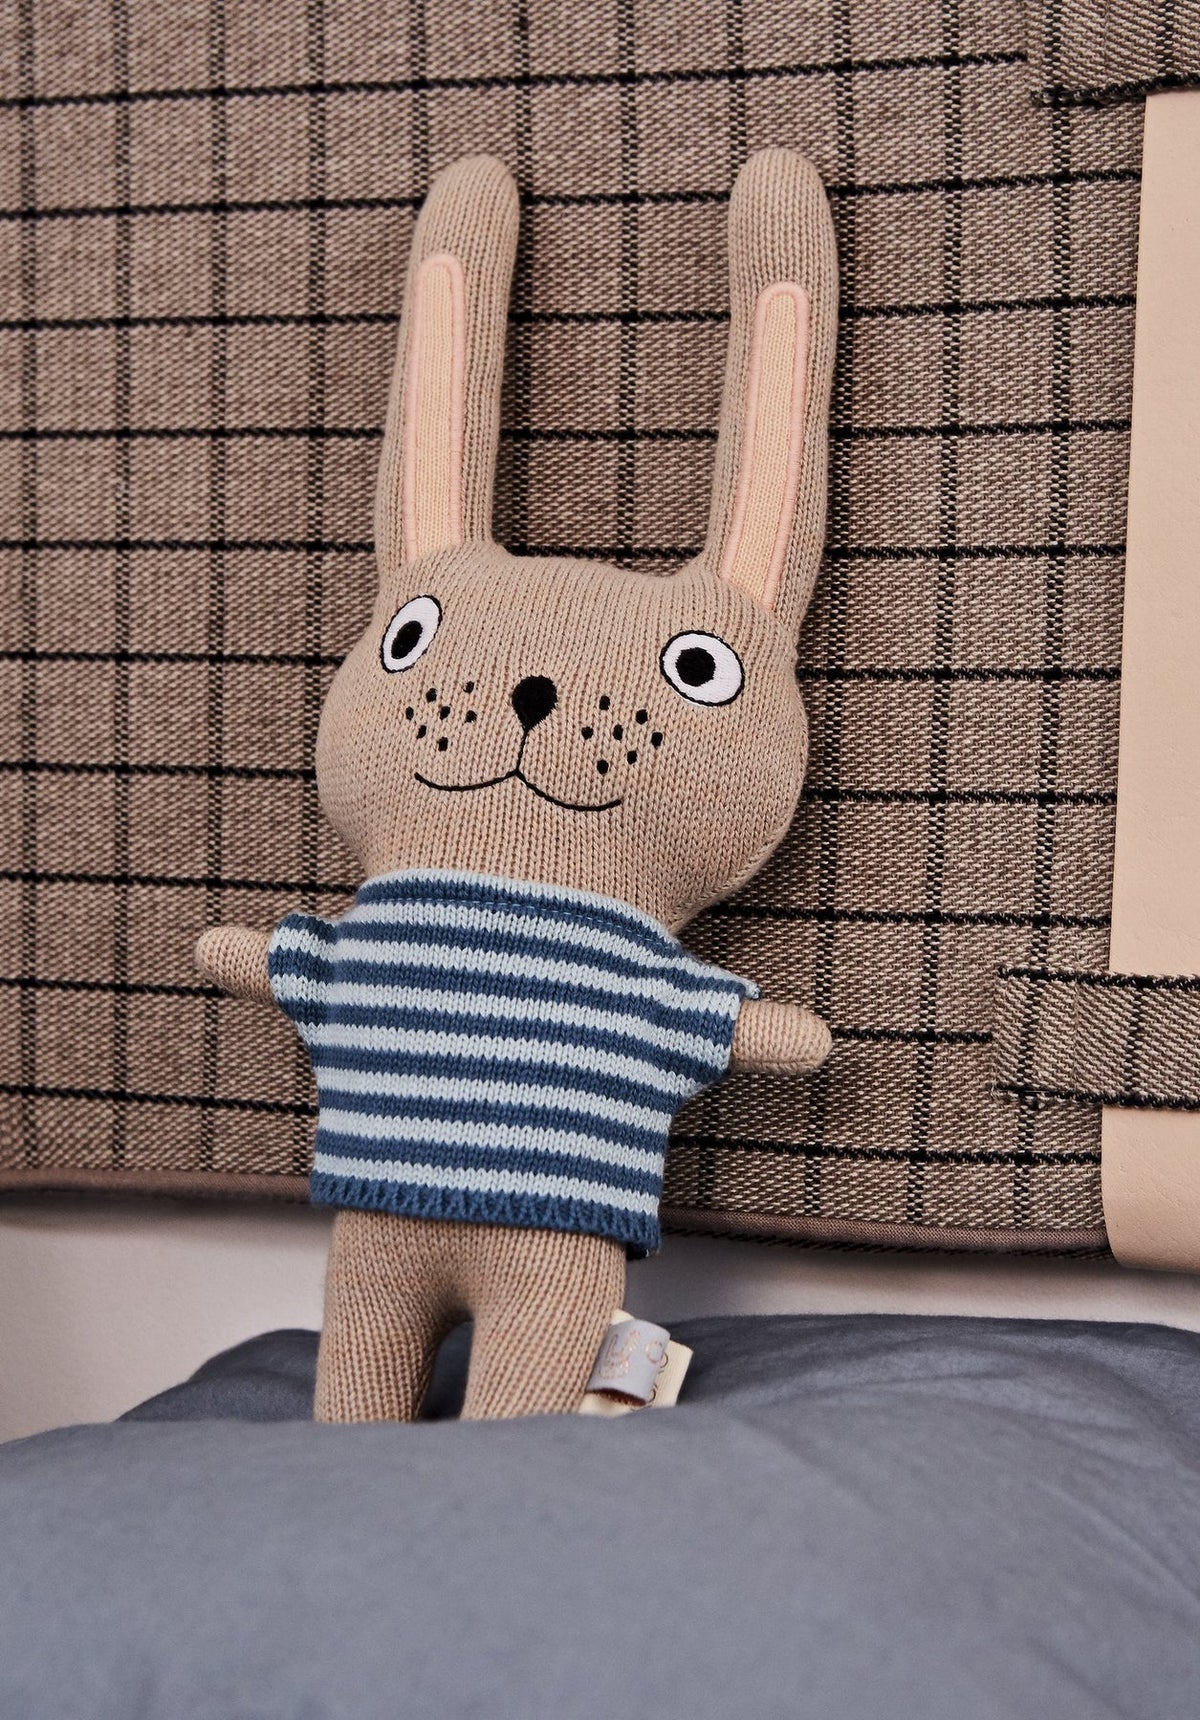 Darling - Baby Felix Rabbit by OYOY - Maude Kids Decor